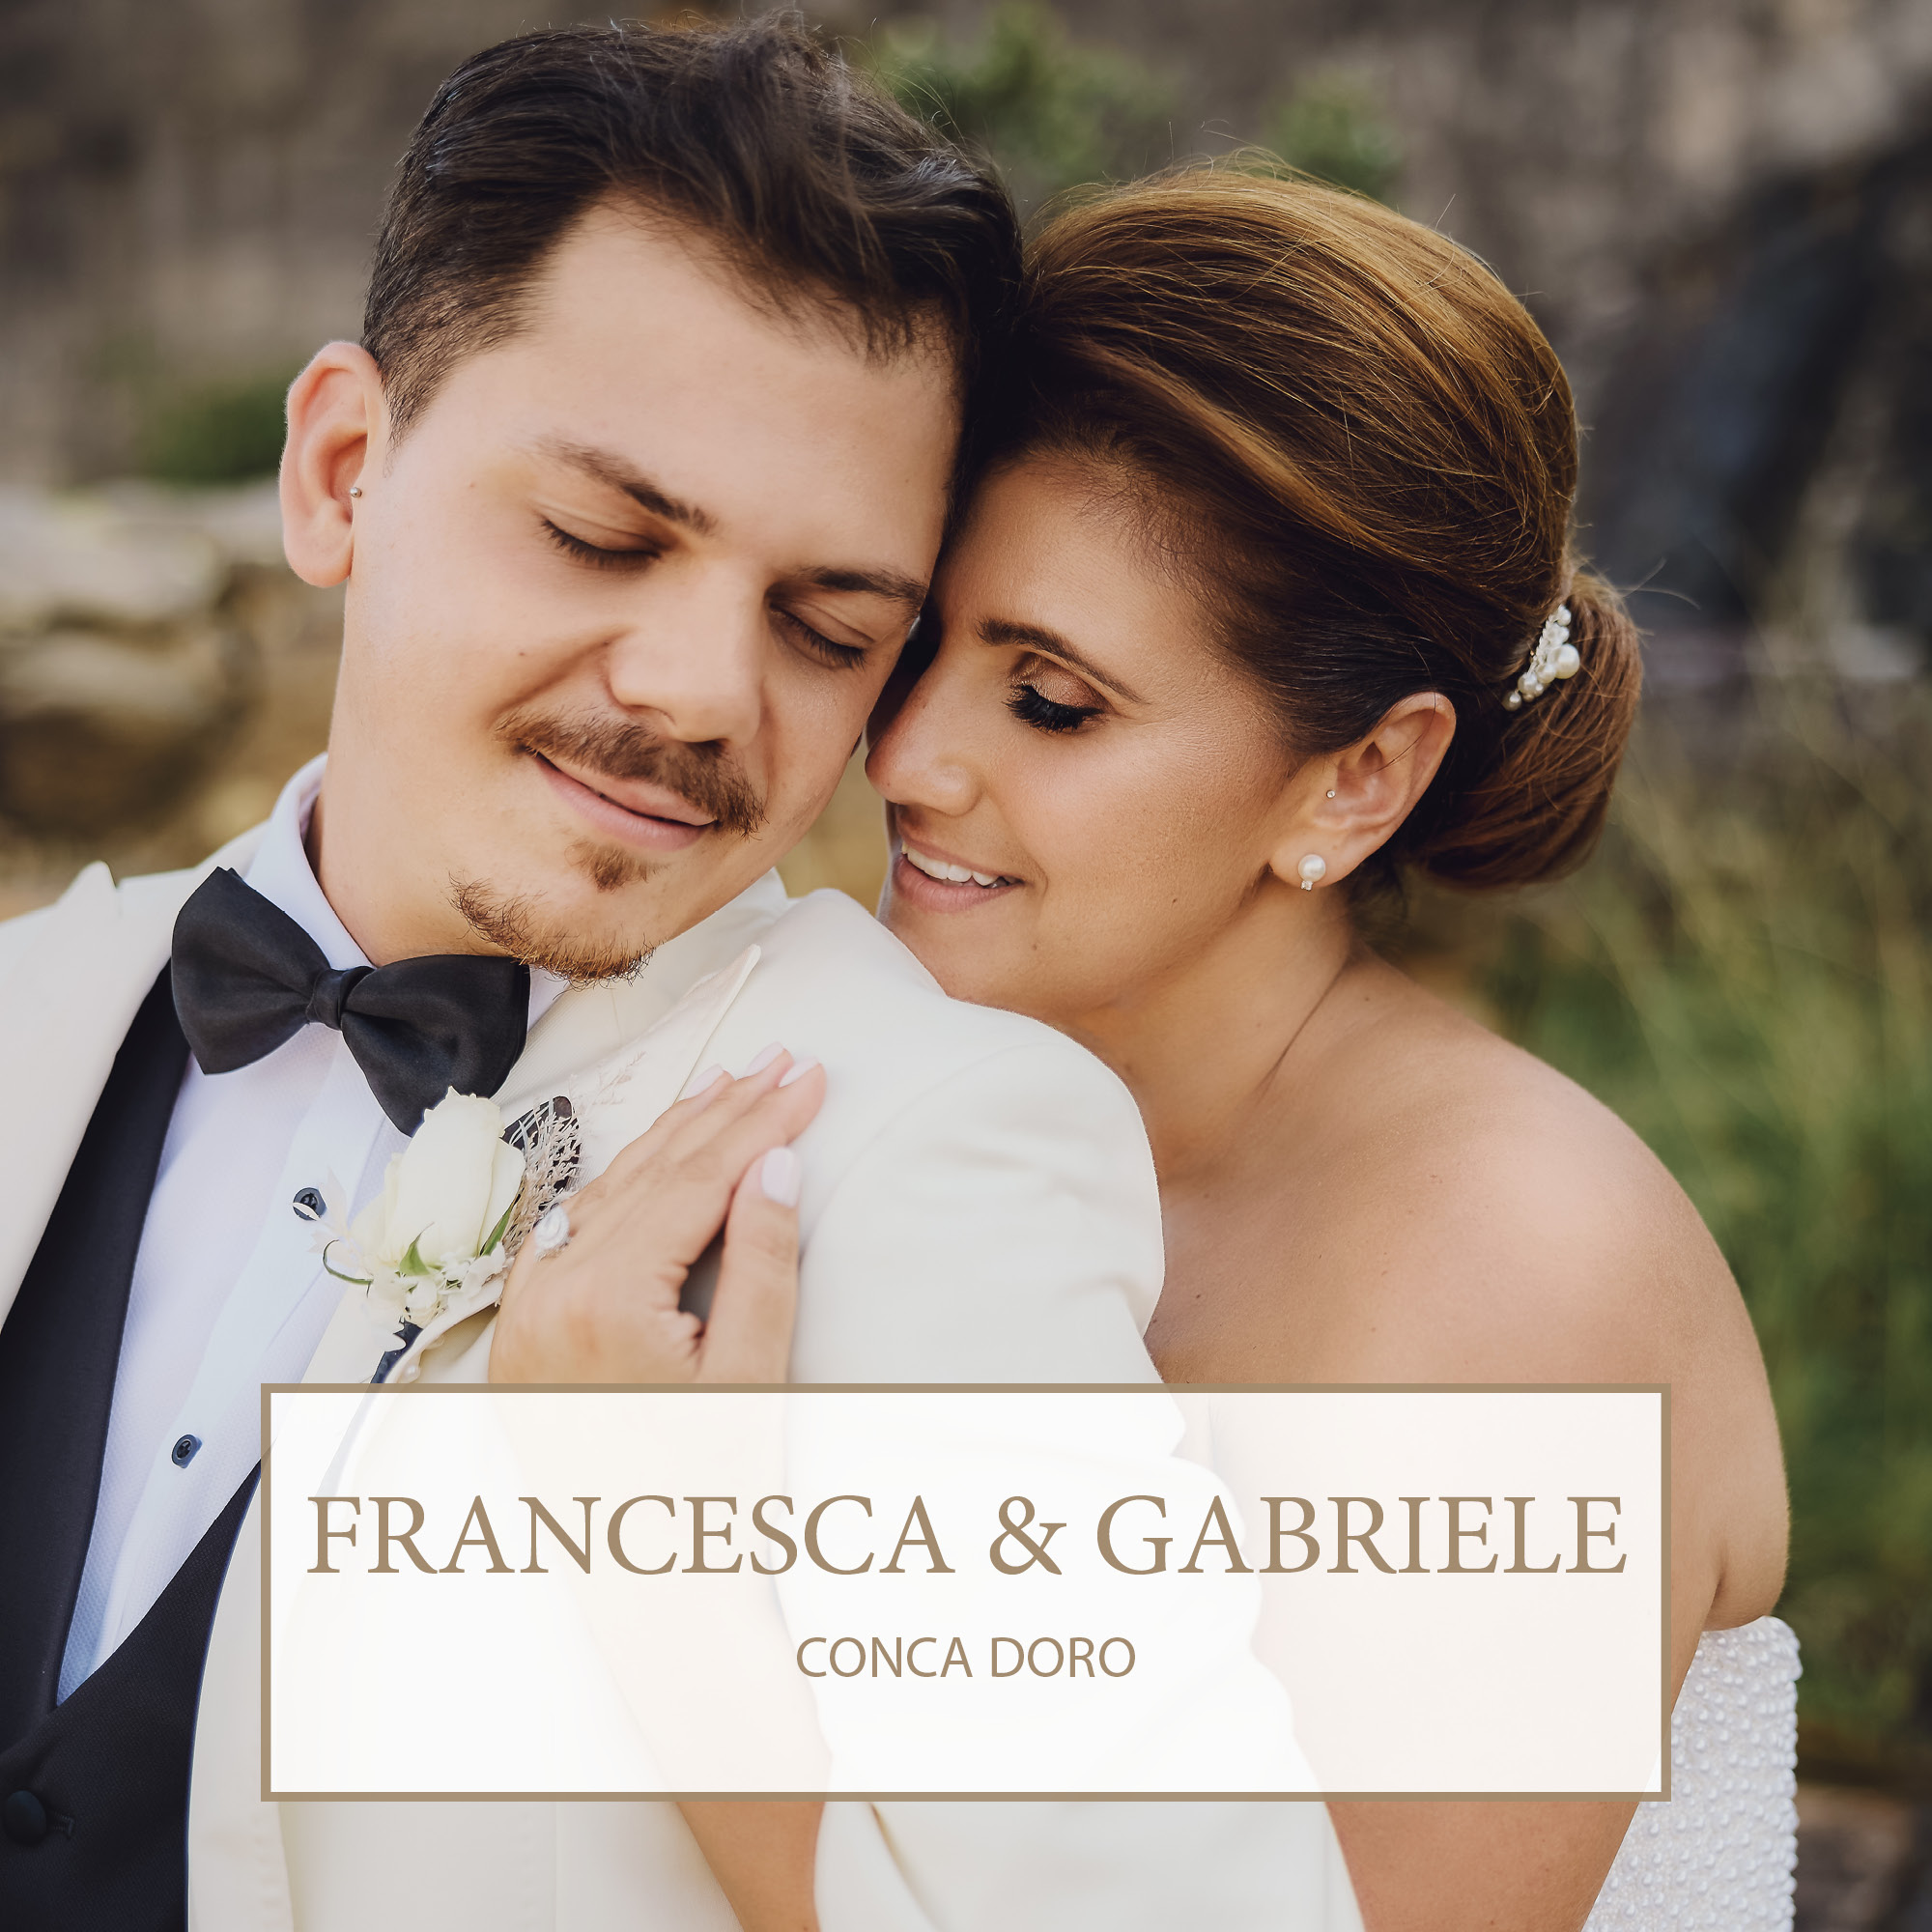 Conca Doro Wedding: Francesca & Gabriele 1